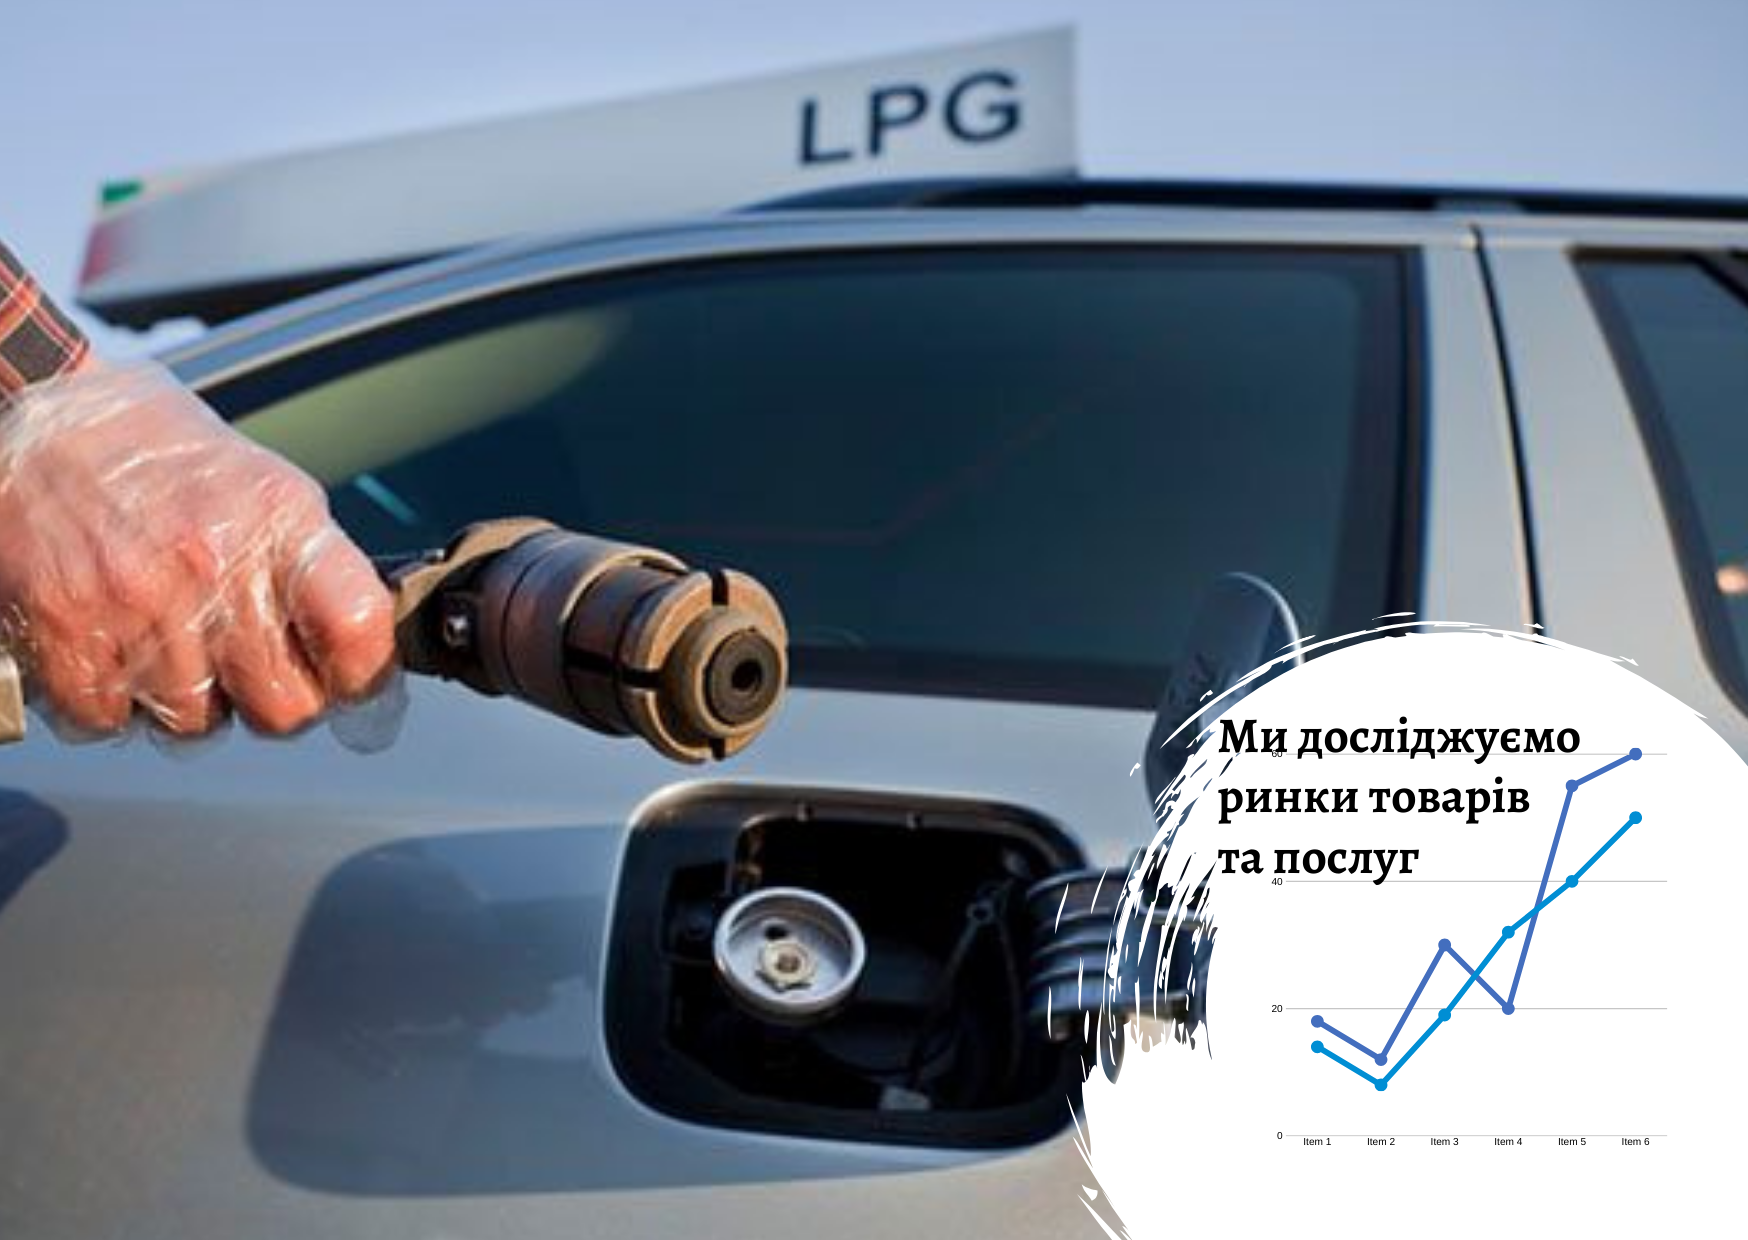 Ukrainian and EU LPG market 